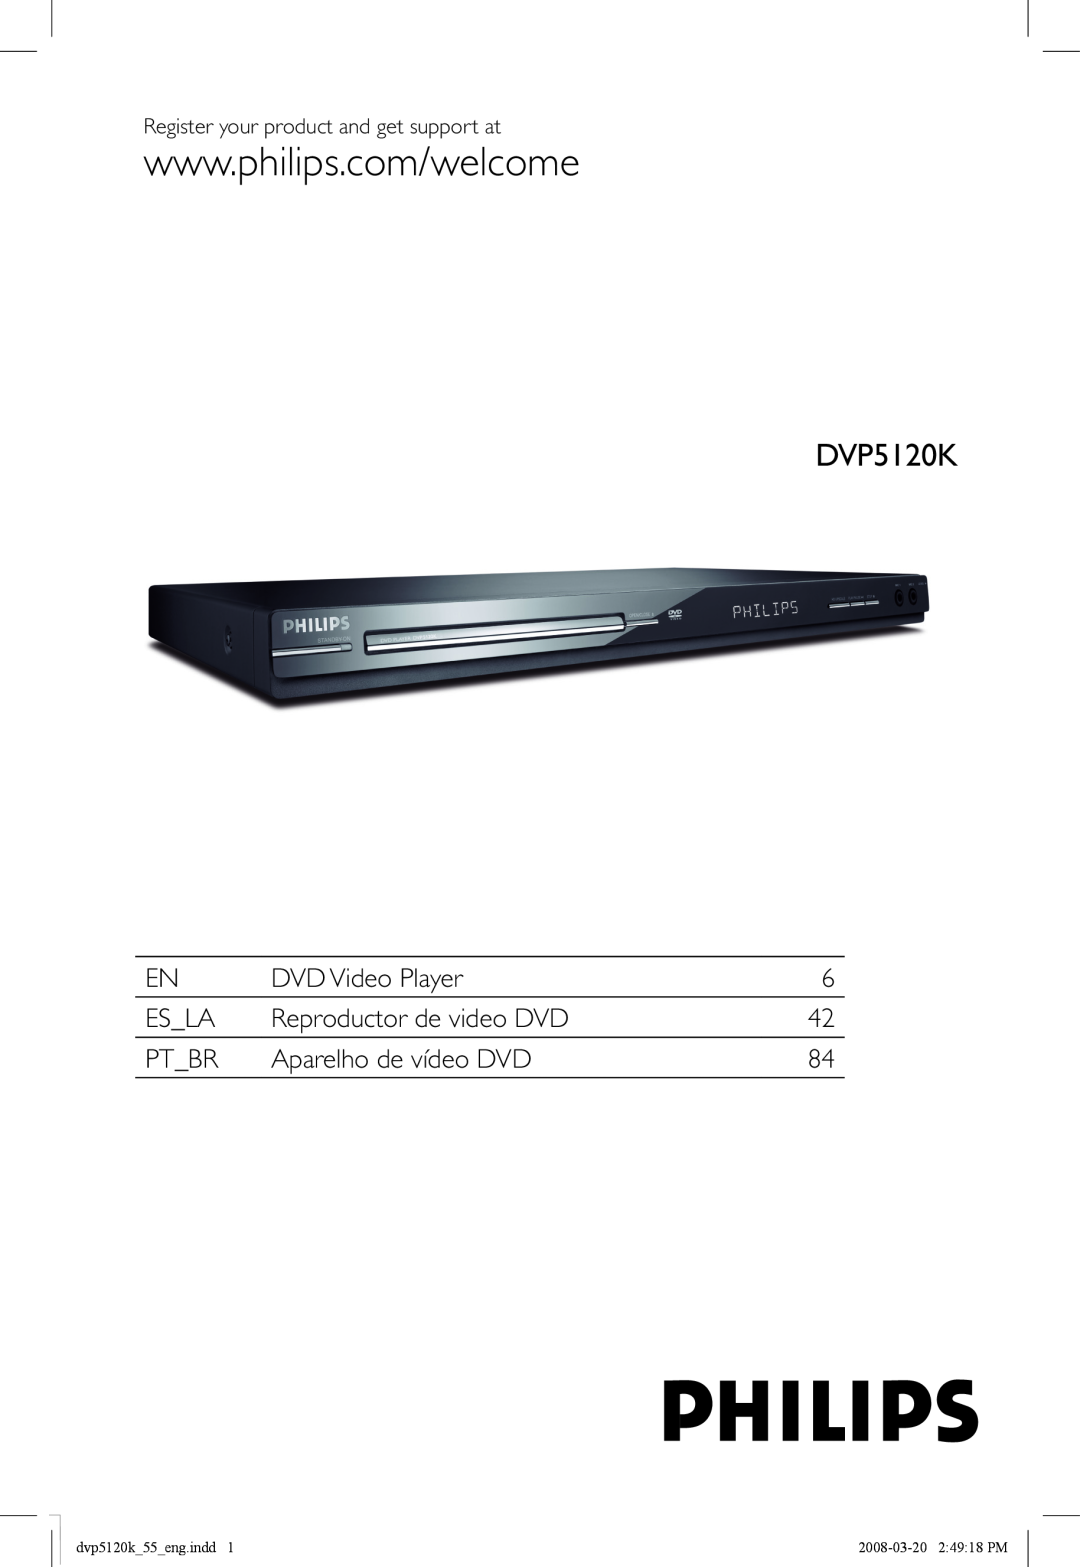 Philips DVP5120KX manual DVD Video Player, Esla, Reproductor de video DVD, Ptbr, Aparelho de vídeo DVD, dvp5120k55eng.indd 